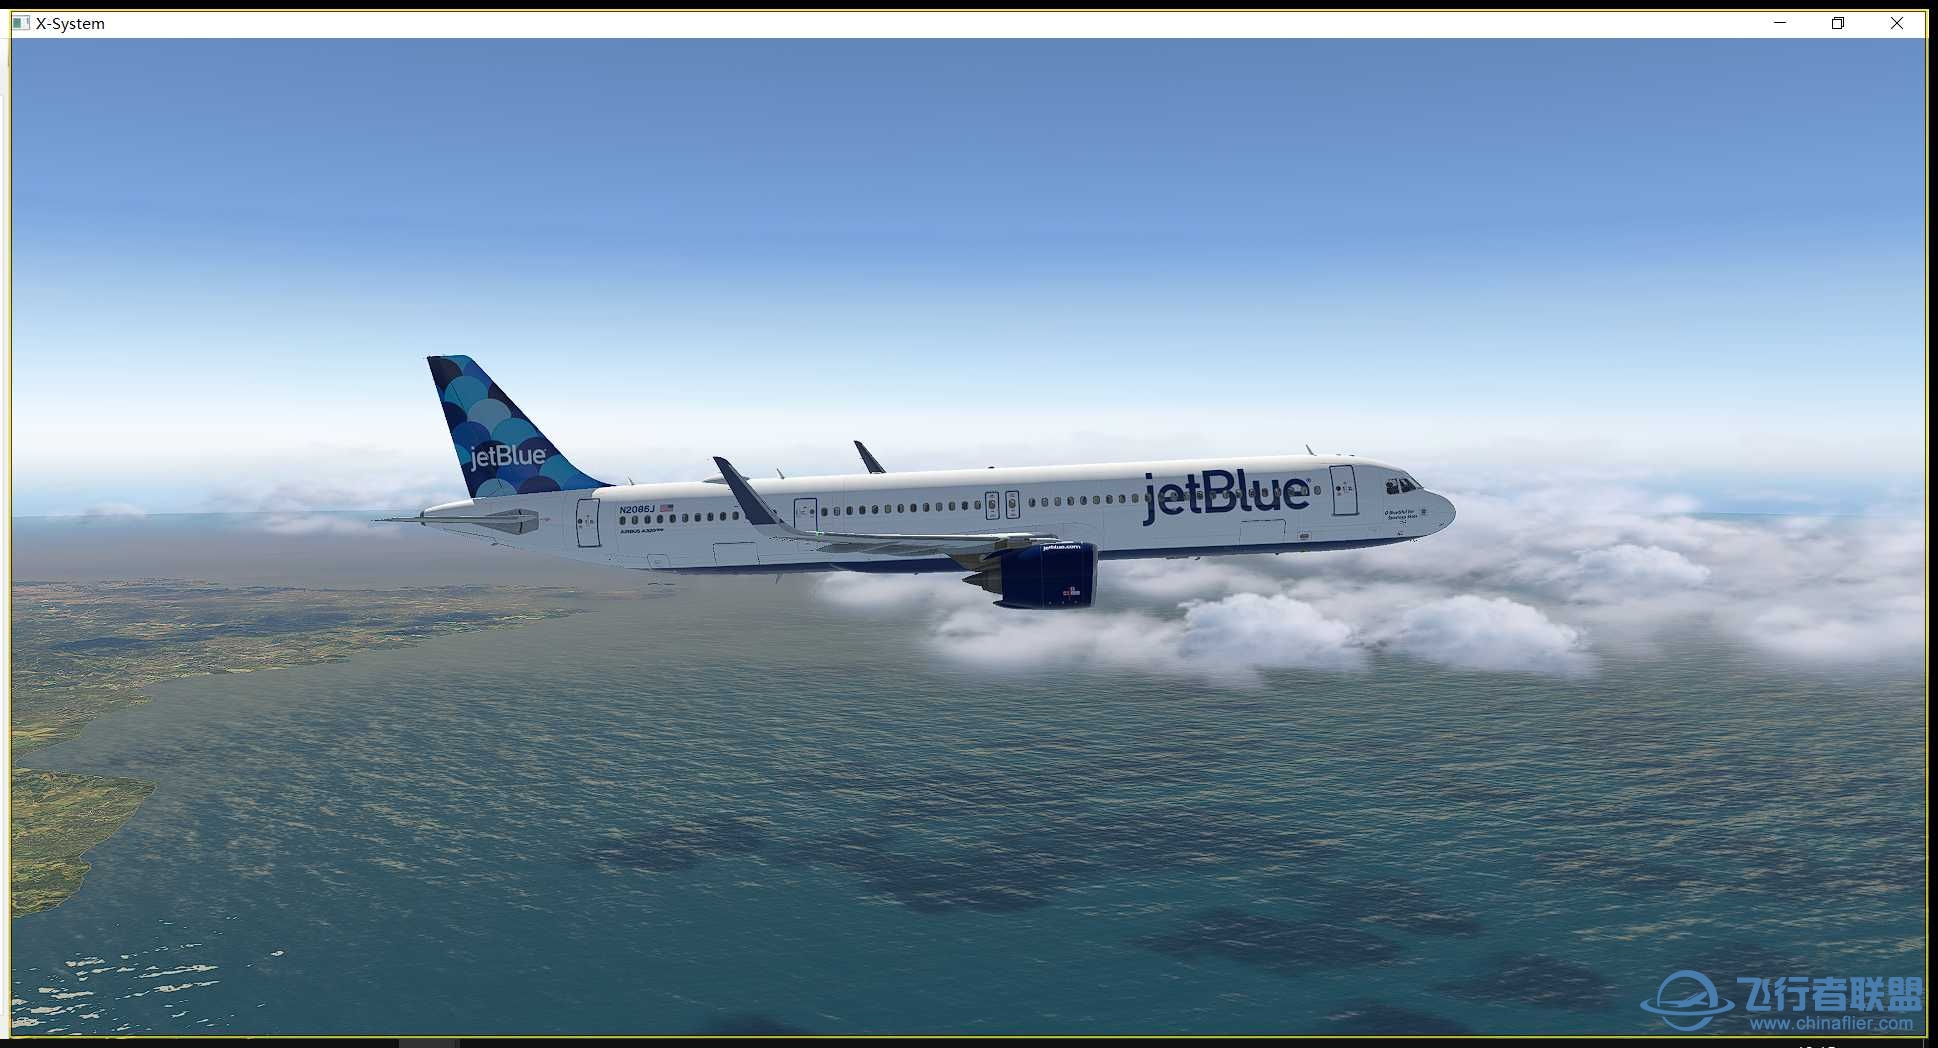 JETBLUE A321 NEO 飞行美图-8055 